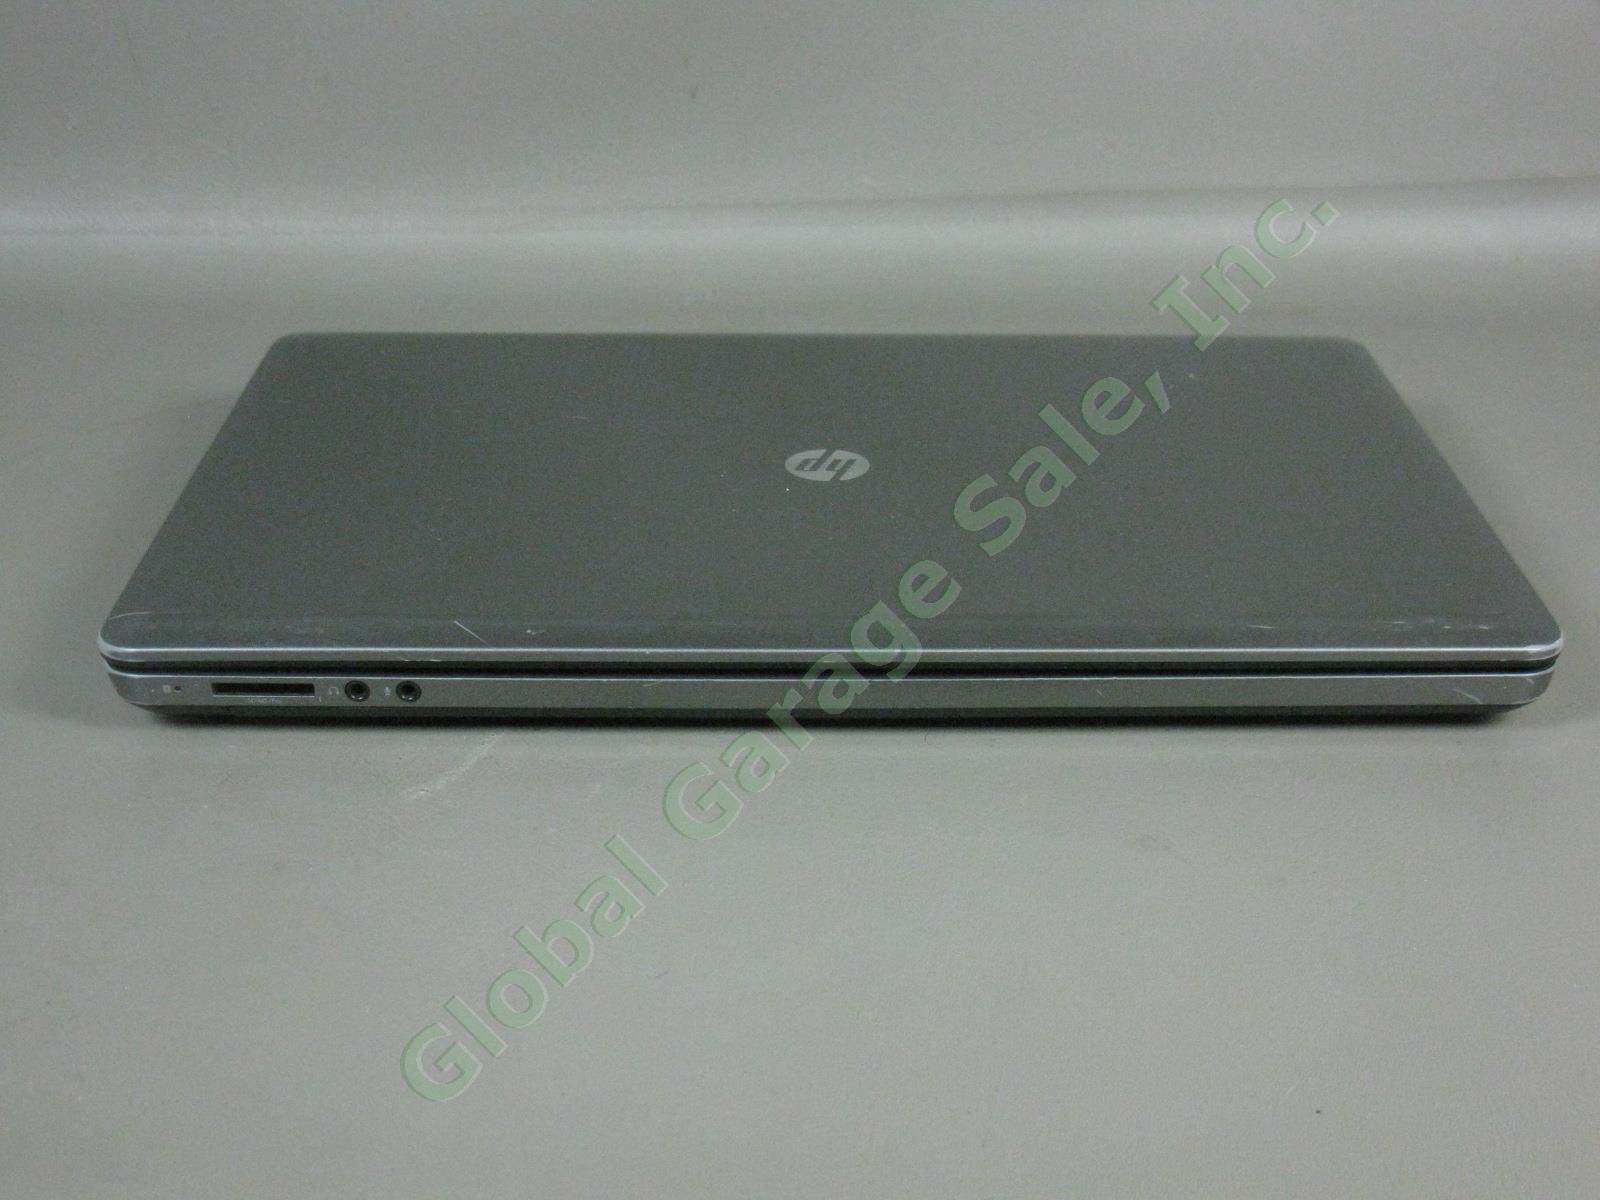 HP 4540s ProBook Laptop i5 2.60GHz 4GB 300GB Windows 10 Pro Works Great See Desc 4